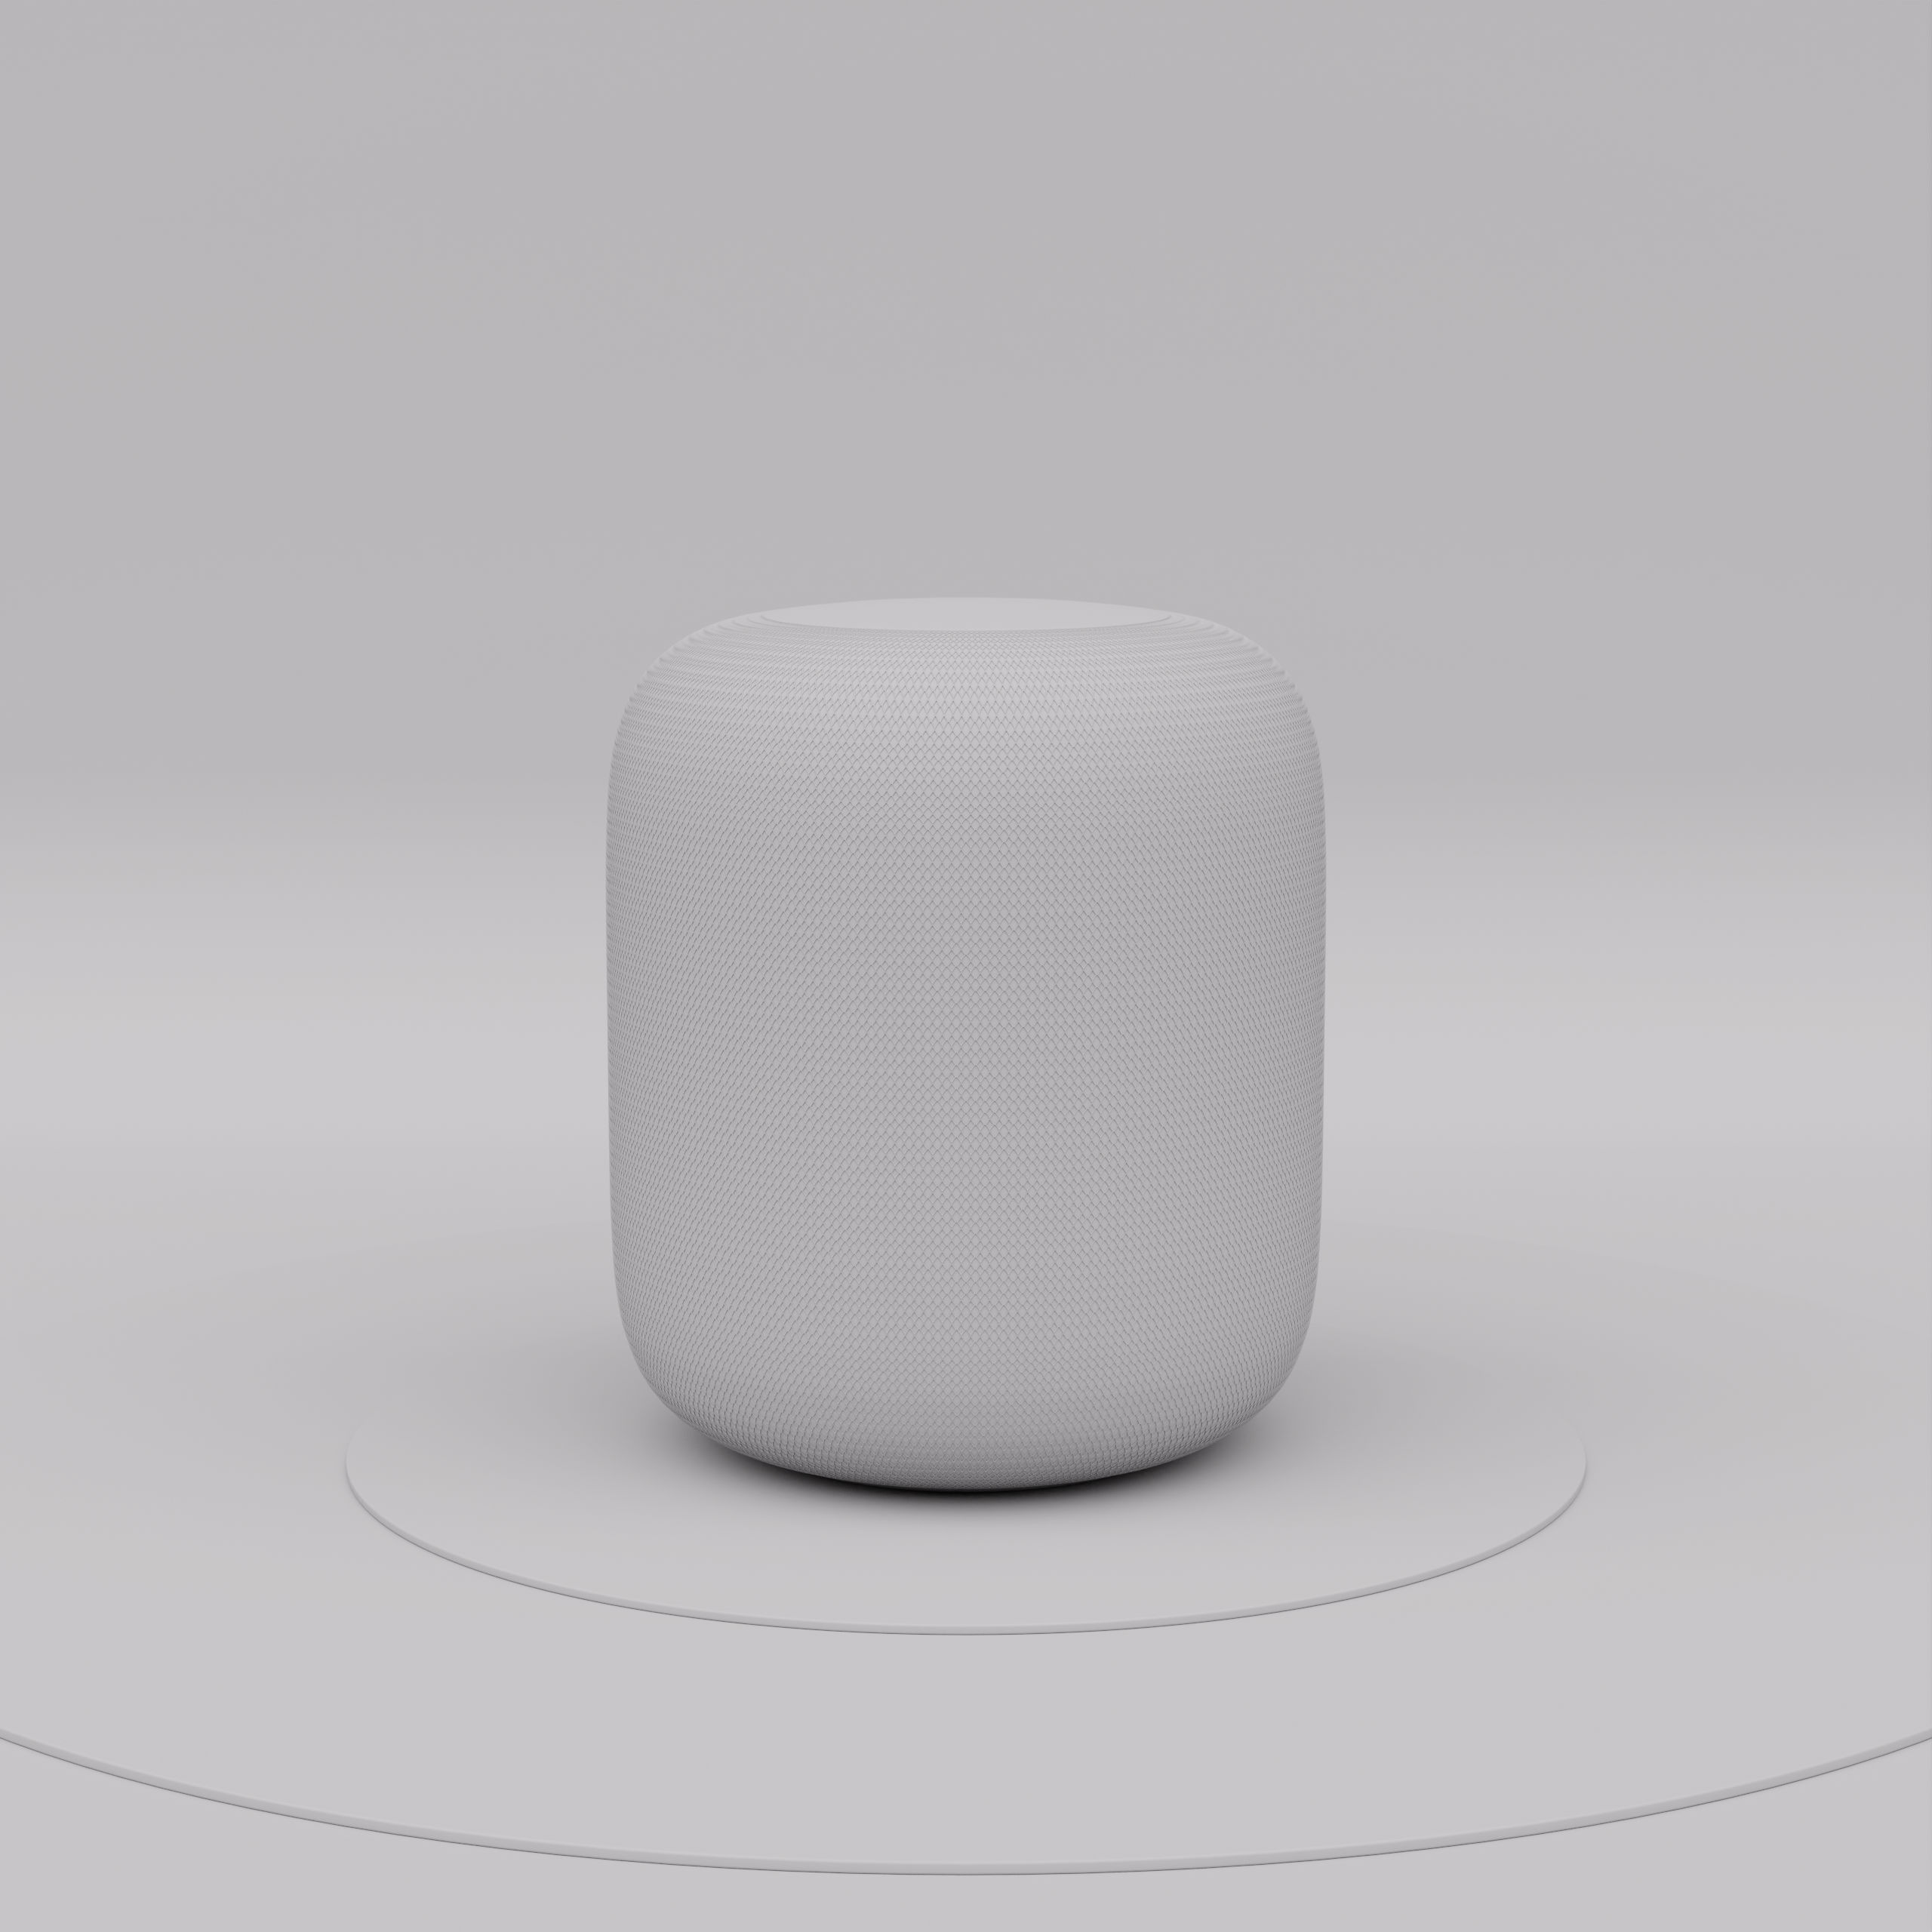 18 Homepod Clay V1 - Apple HomePod CGI - Sonny Nguyen